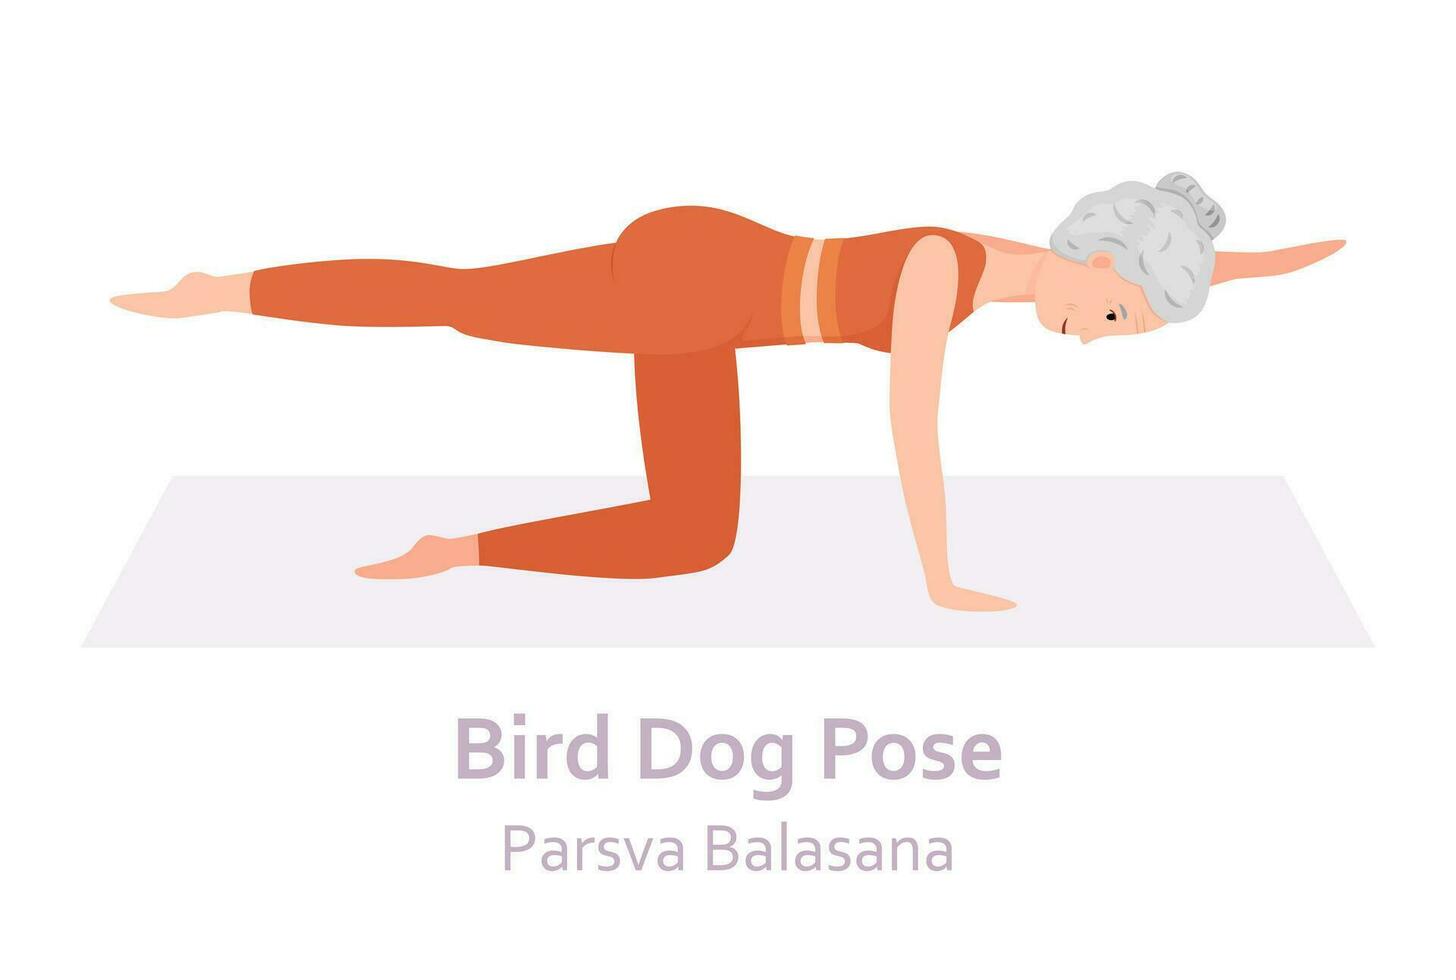 pájaro perro yoga pose. parsva balasana. mayor mujer practicando yoga asanas sano estilo de vida. plano dibujos animados personaje. vector ilustración